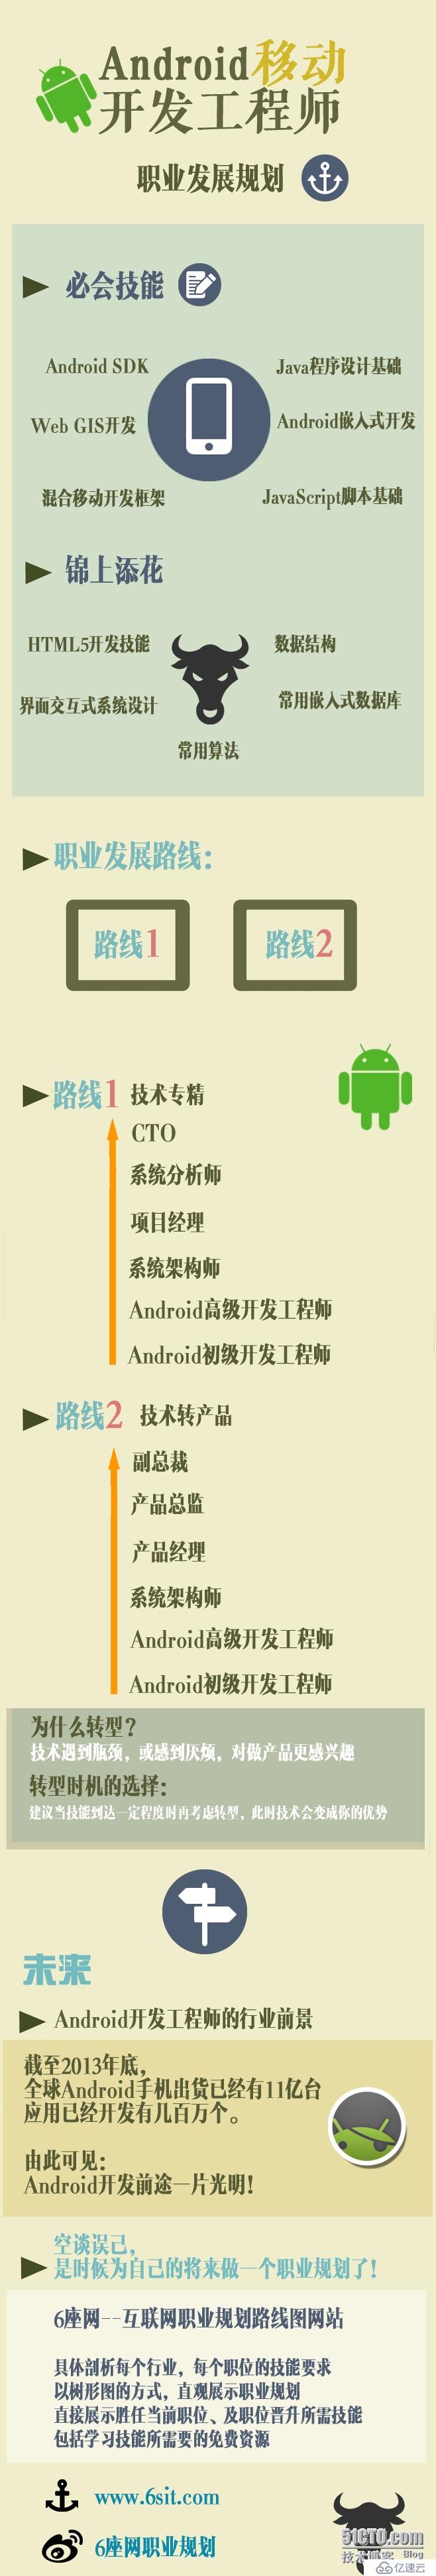 Android安卓移动开发工程师职业规划图